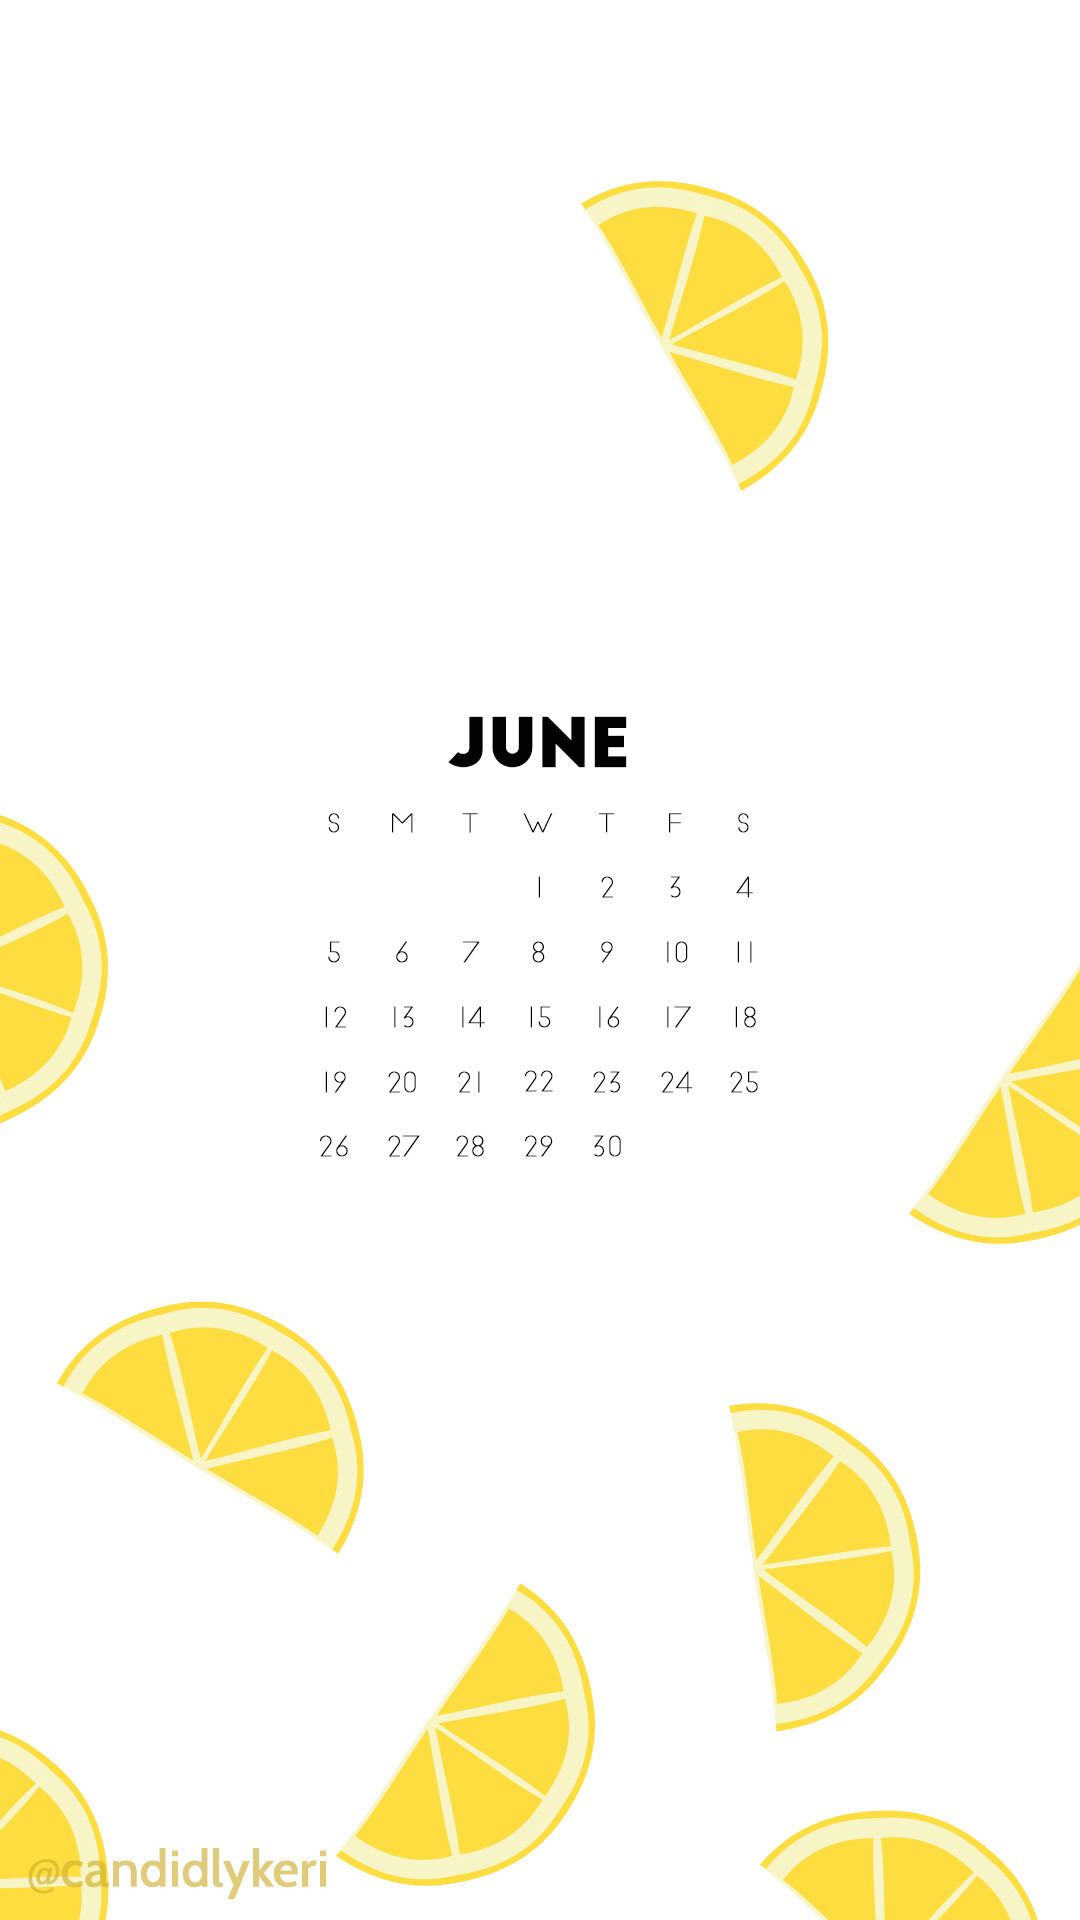 1080x1920 Lemon fun lemonade June 2016 calendar wallpaper free download for iPhone  android or desktop background on